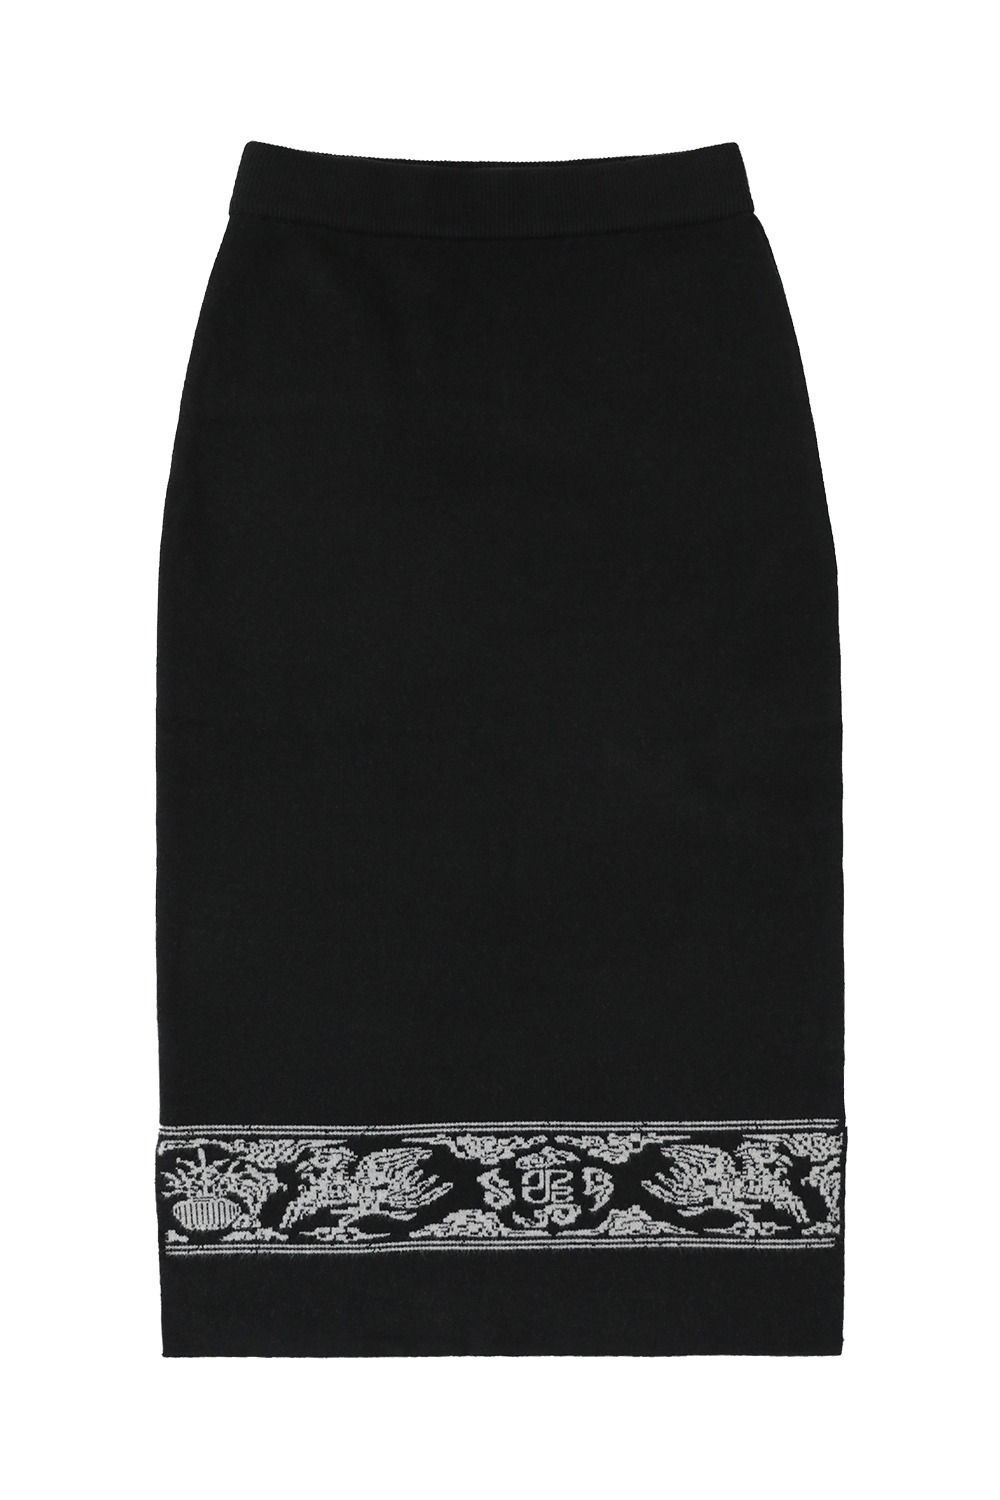 Soft Hanbok Skirt [Black]